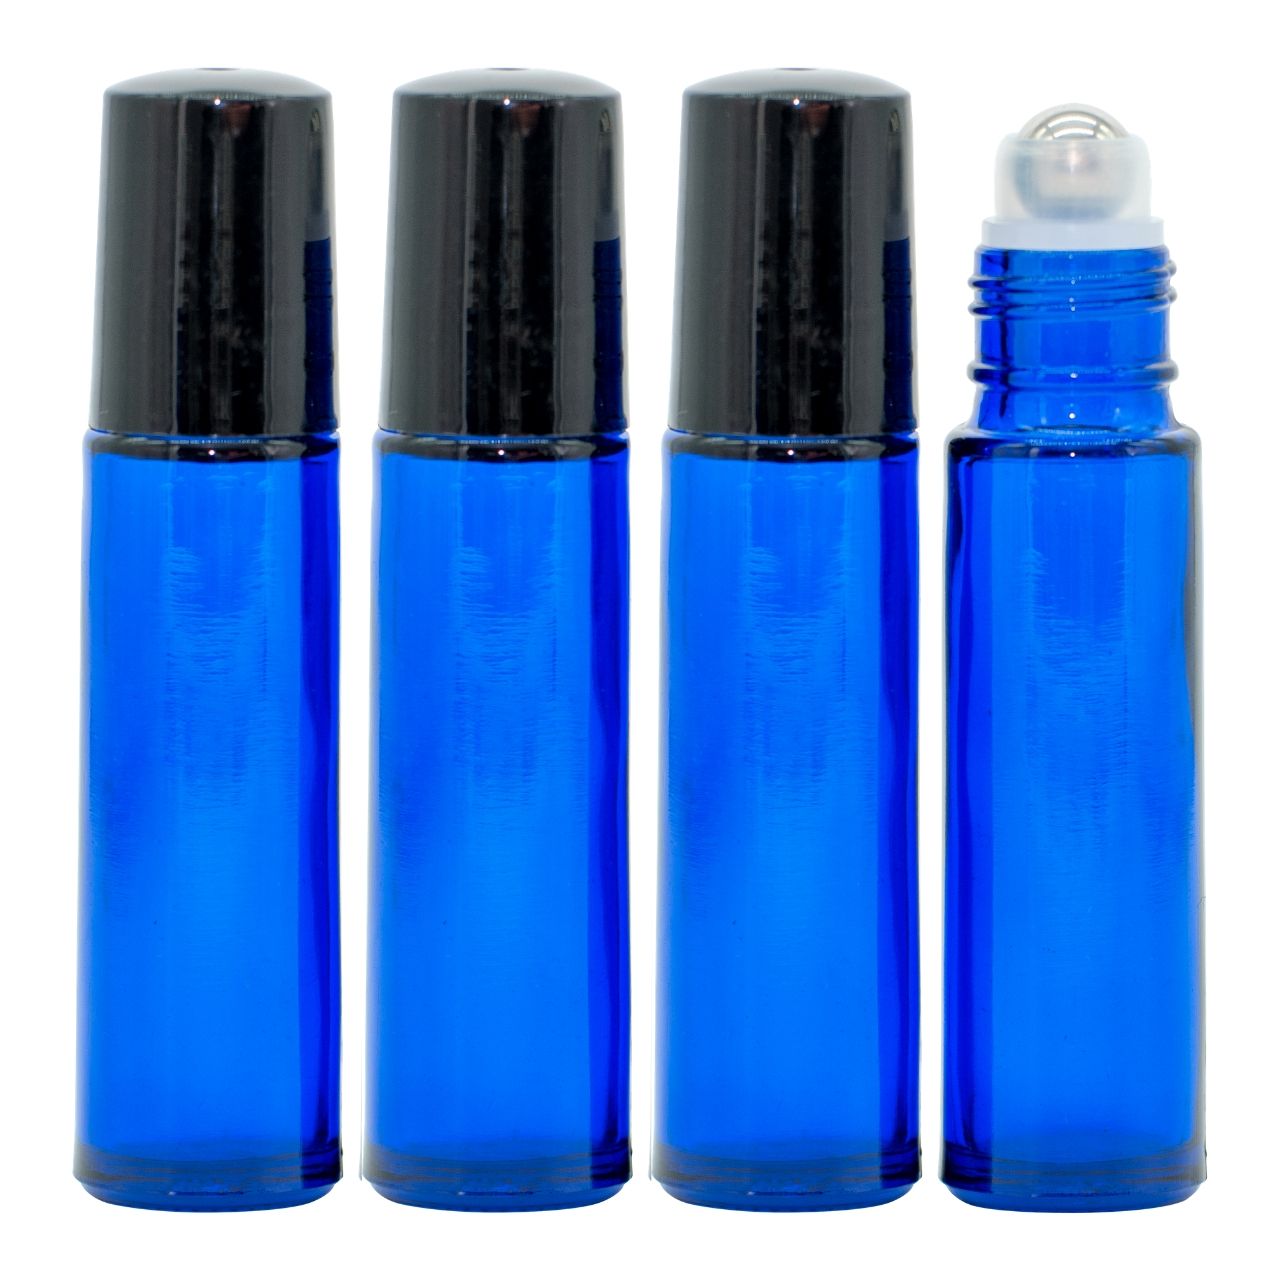 https://aromawelt.de/media/image/7f/f7/bf/10ml-Roll-On-Flasche-Blau-Glas-therische-le-Set-4er.jpg